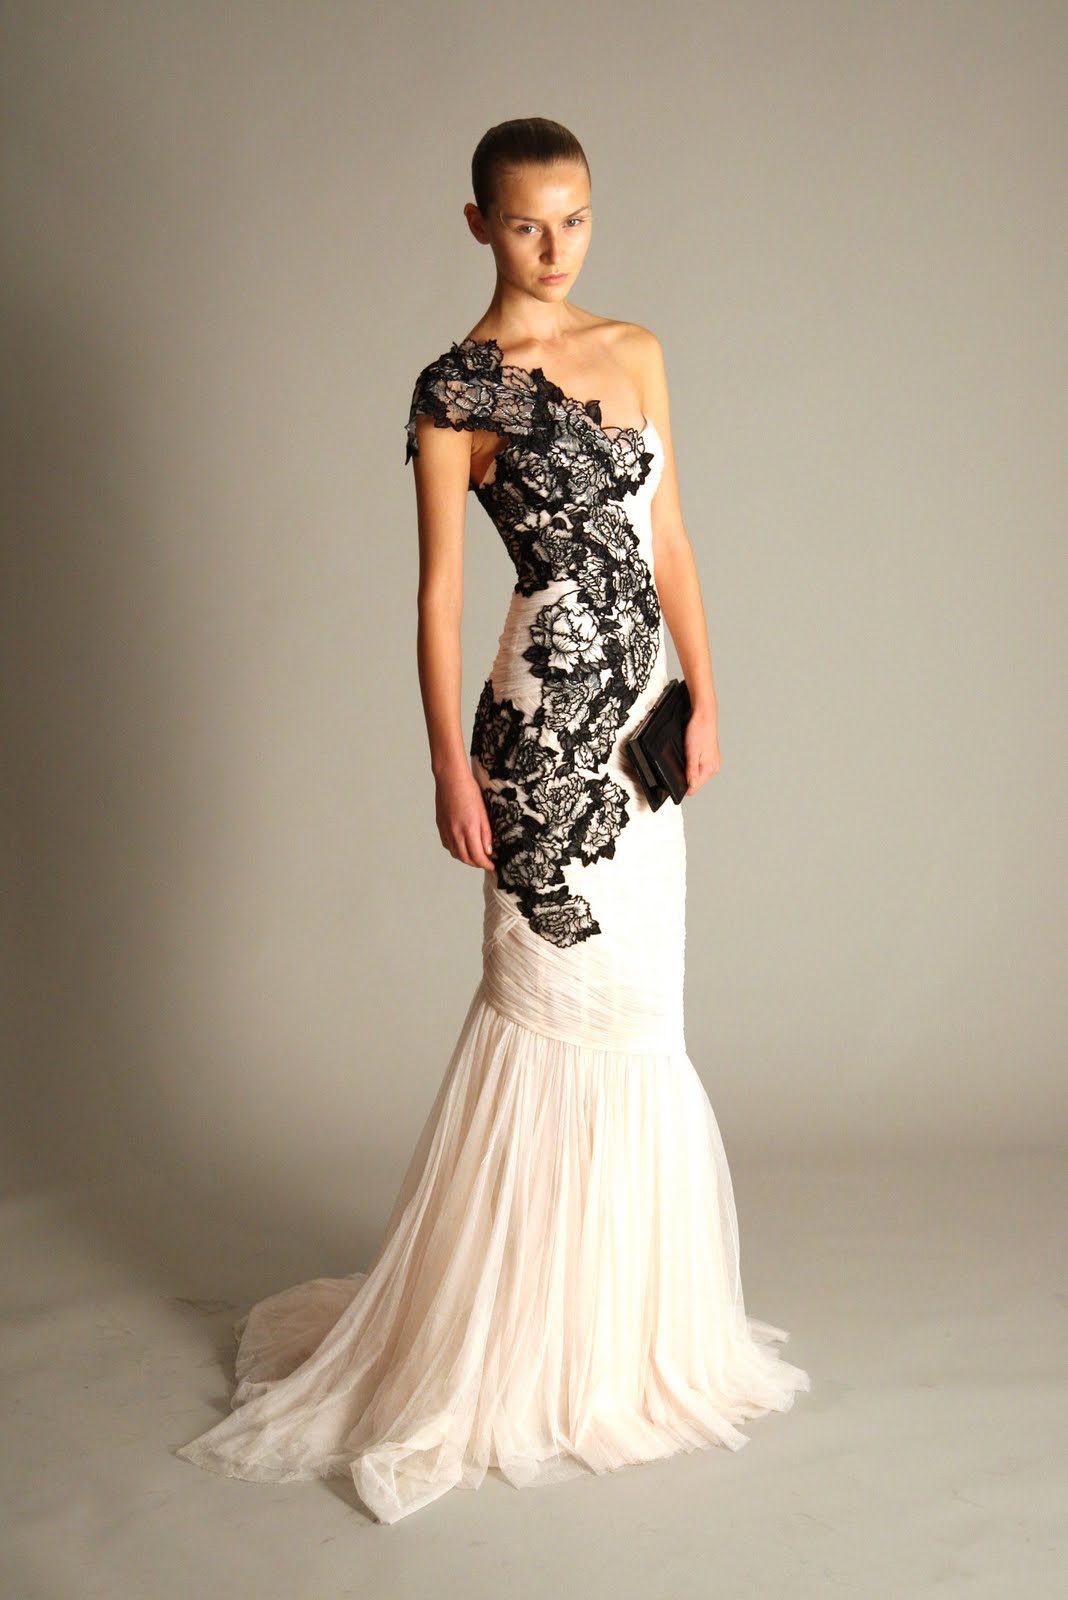 30 Ideas of Beautiful Black and White Wedding Dresses ...